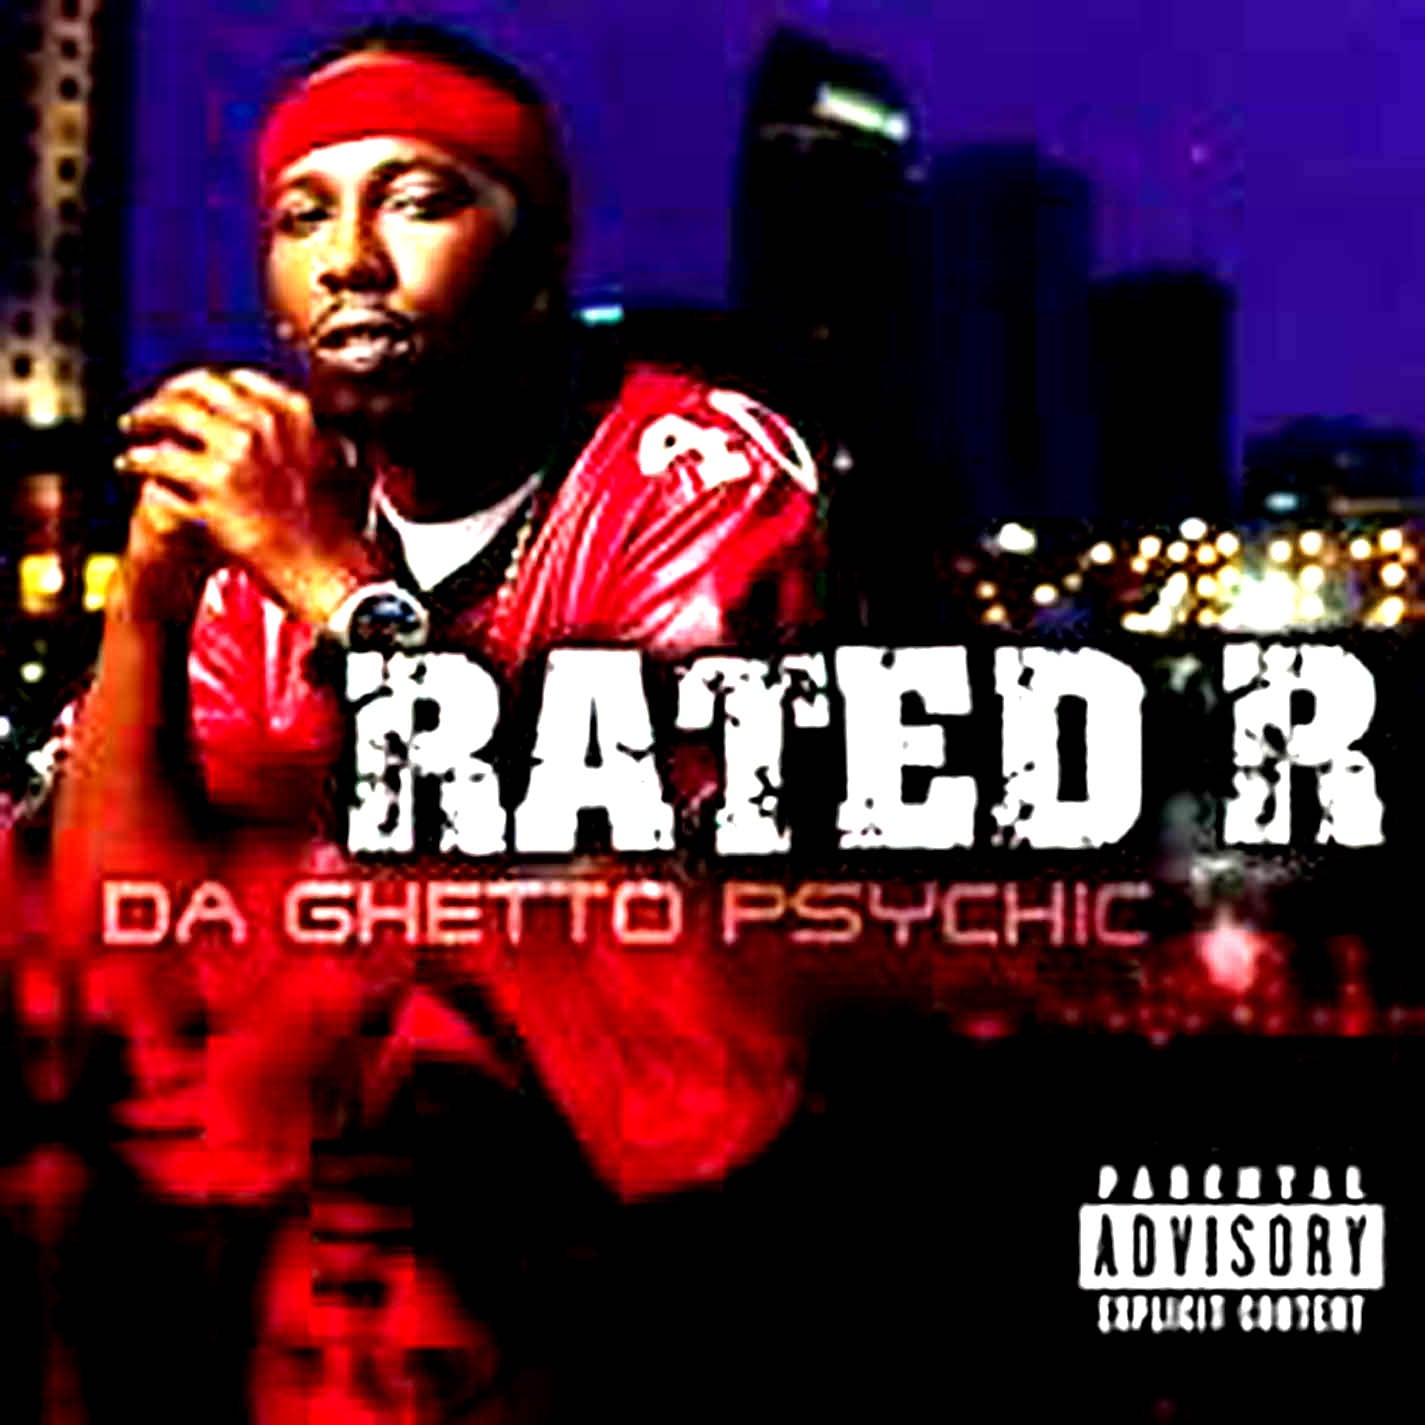 RATED R - DA GHETTO PSYCHIC (CD LP) c2001